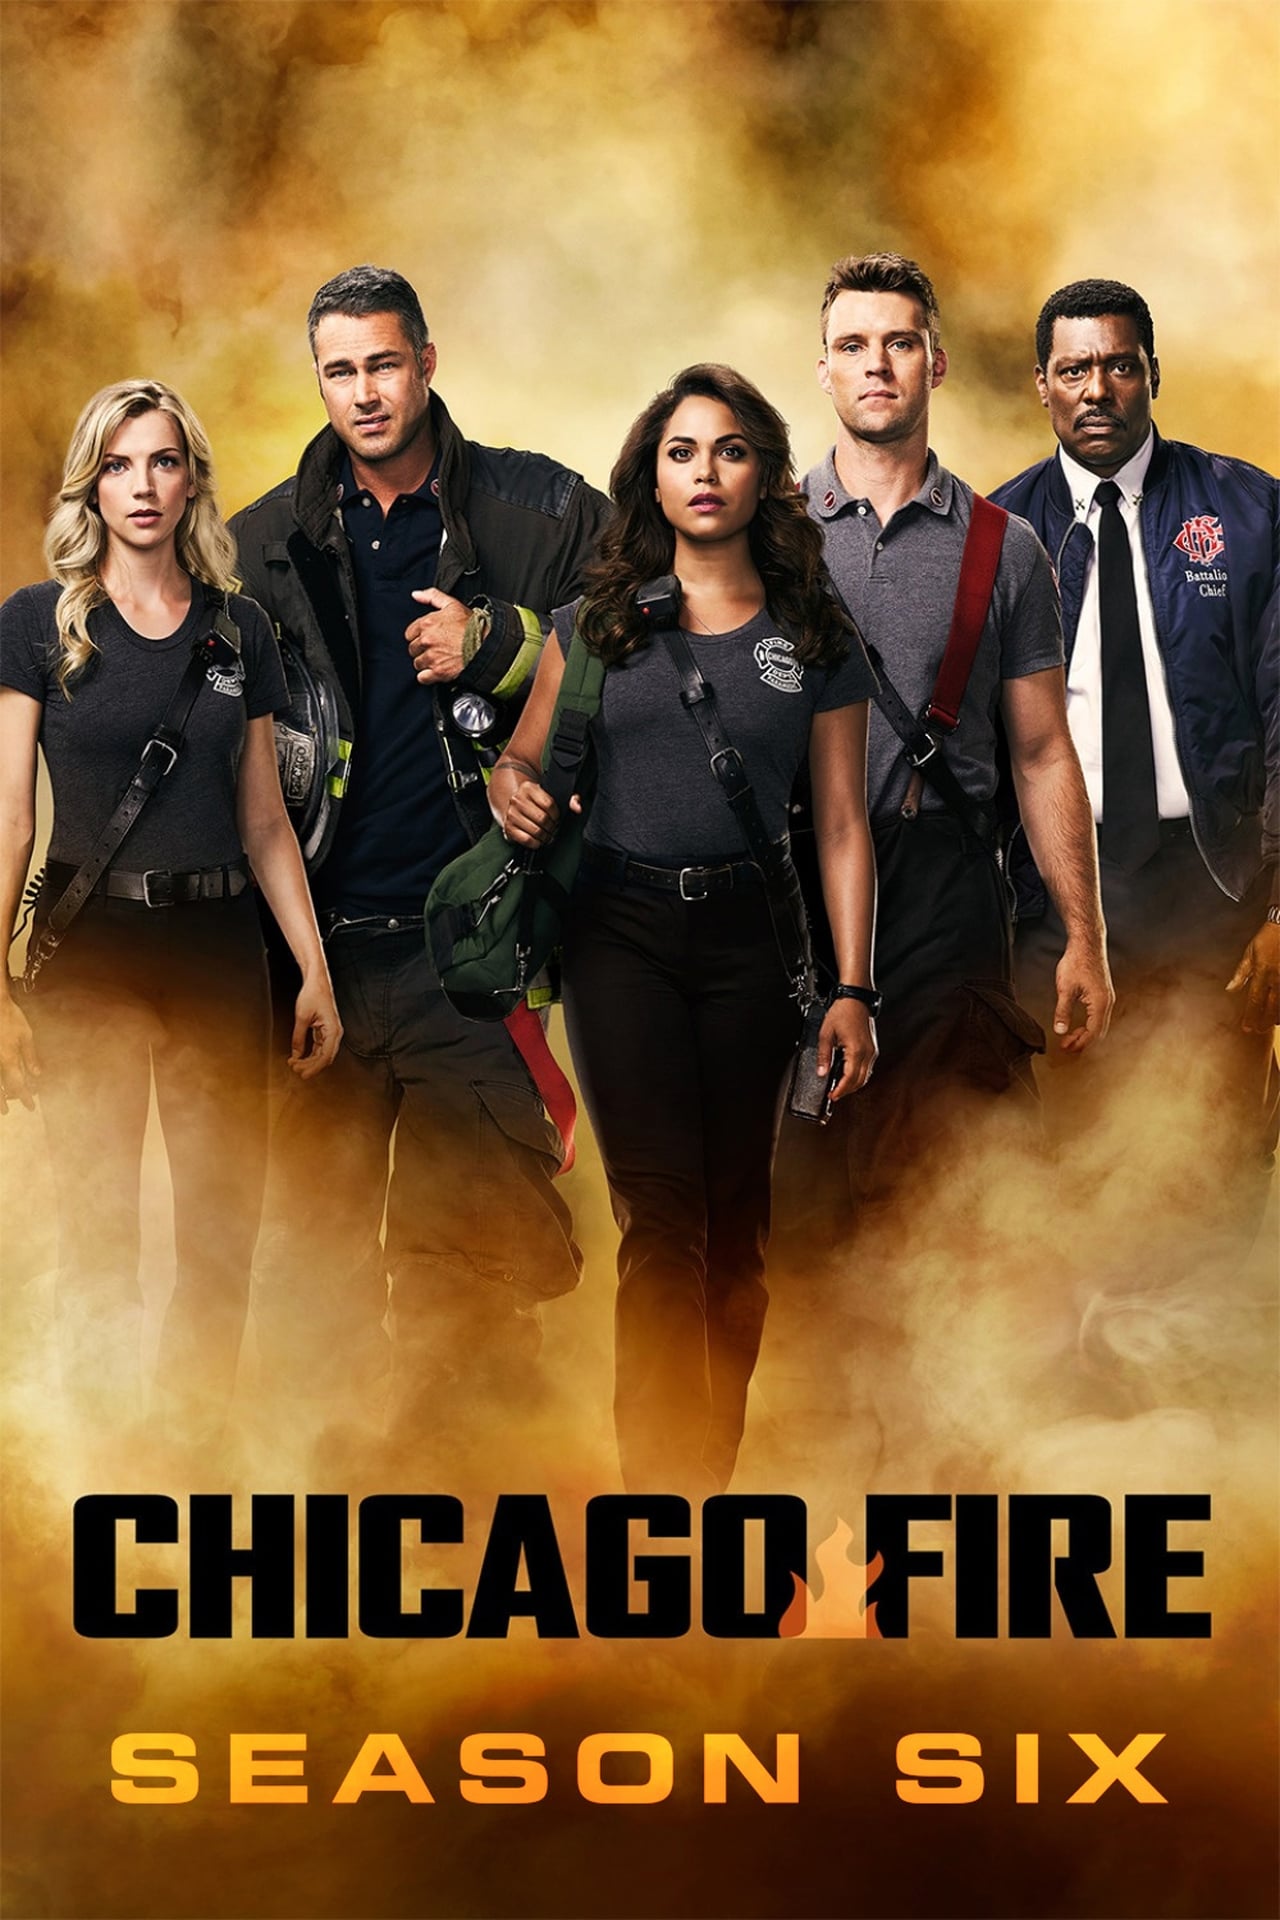 Chicago Fire Season 6 - Watch full episodes free online at Teatv